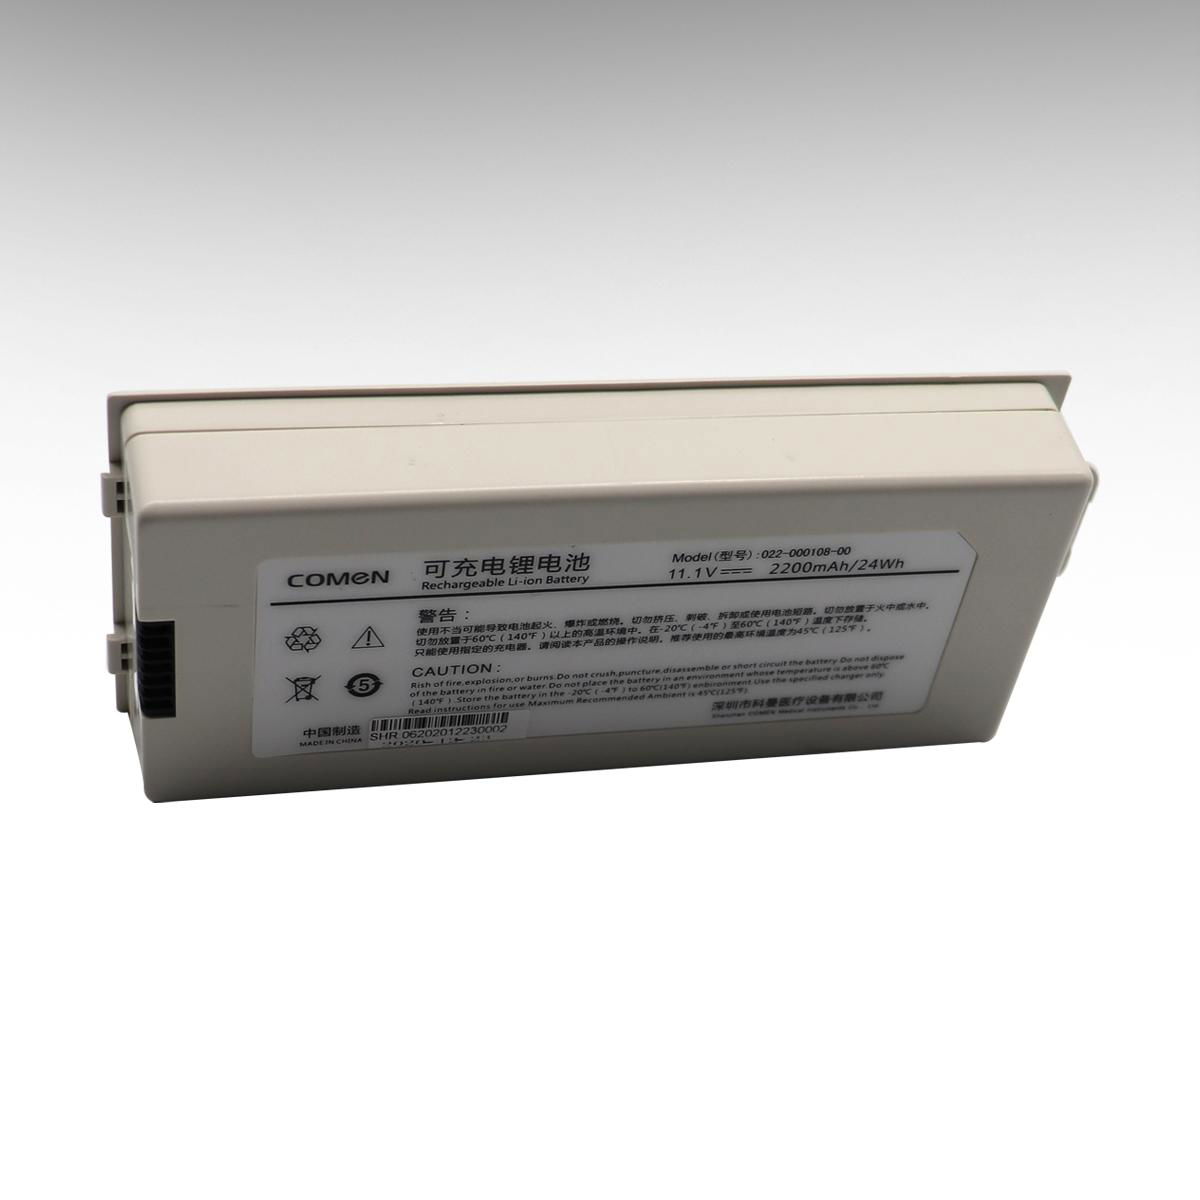 Original COMEN aed defibrillator batteries Li-ion 022-000108-00 2